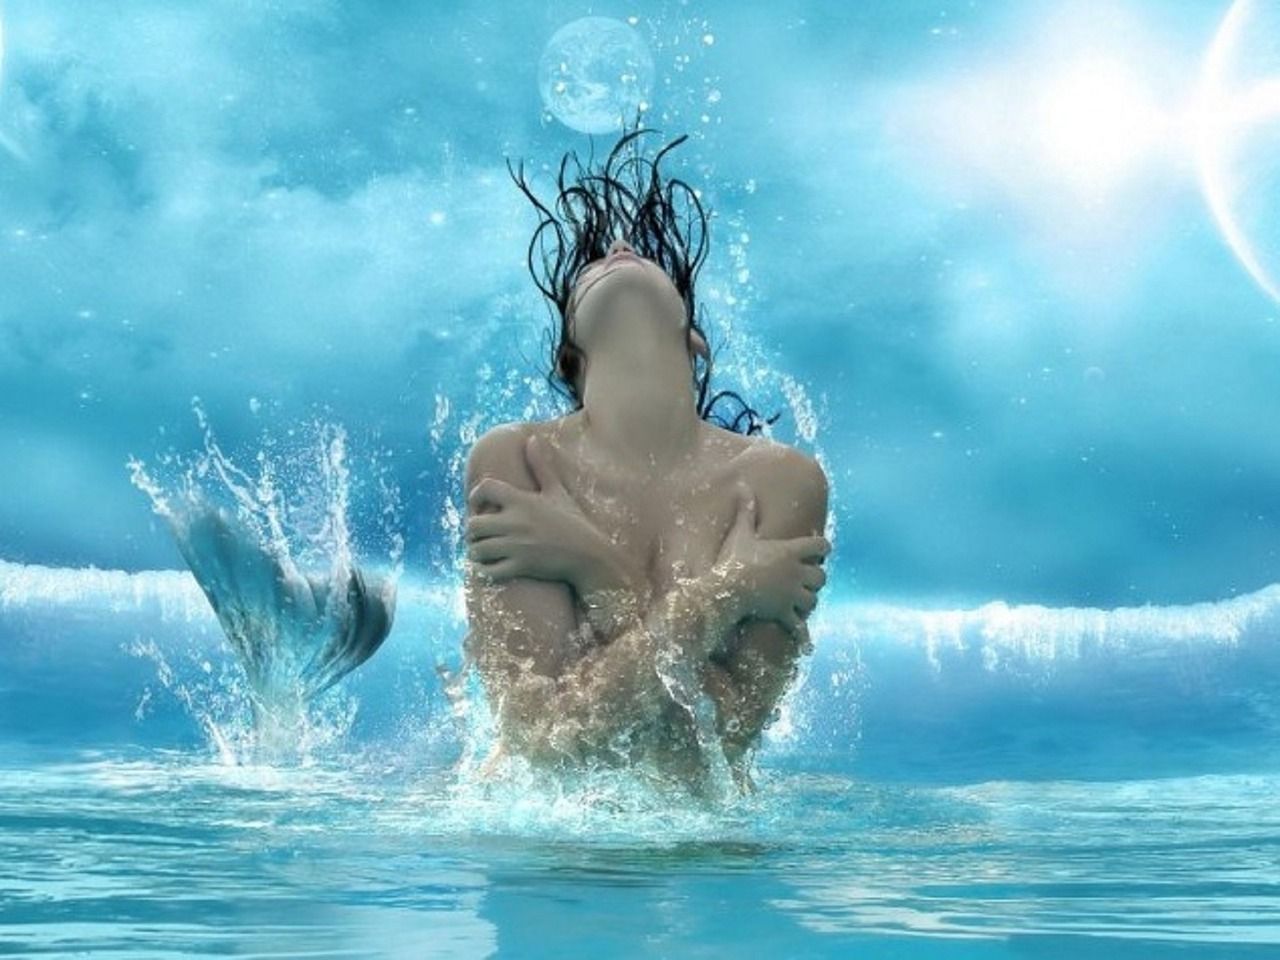 Mermaid Siren Wallpaper HD image .pixabay.com